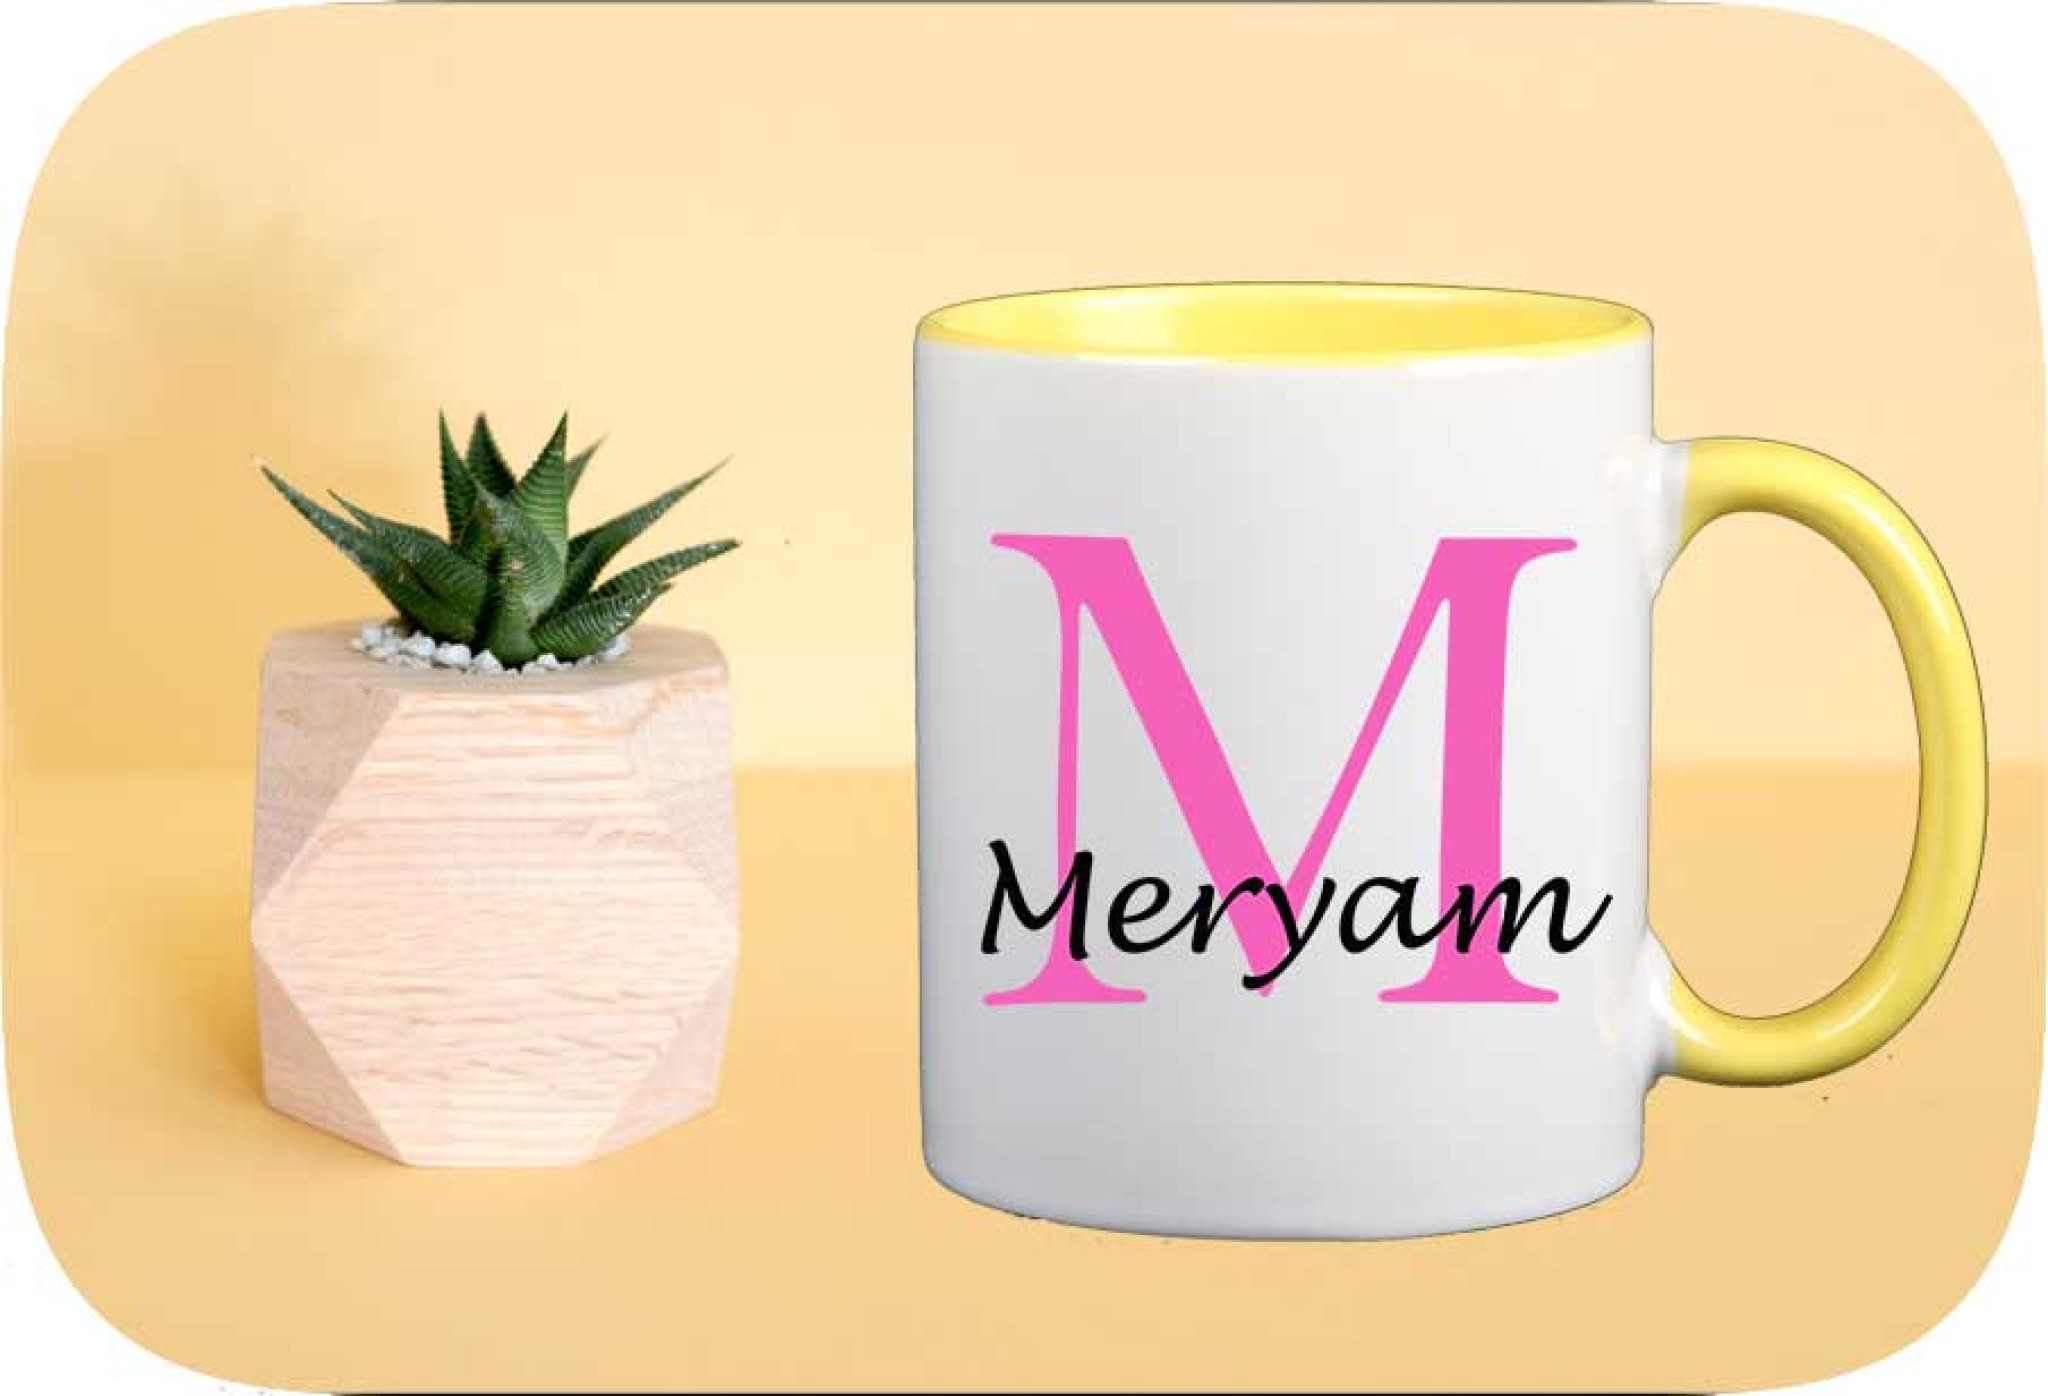 Personalised-name-and-intial-mug-gift.jpg